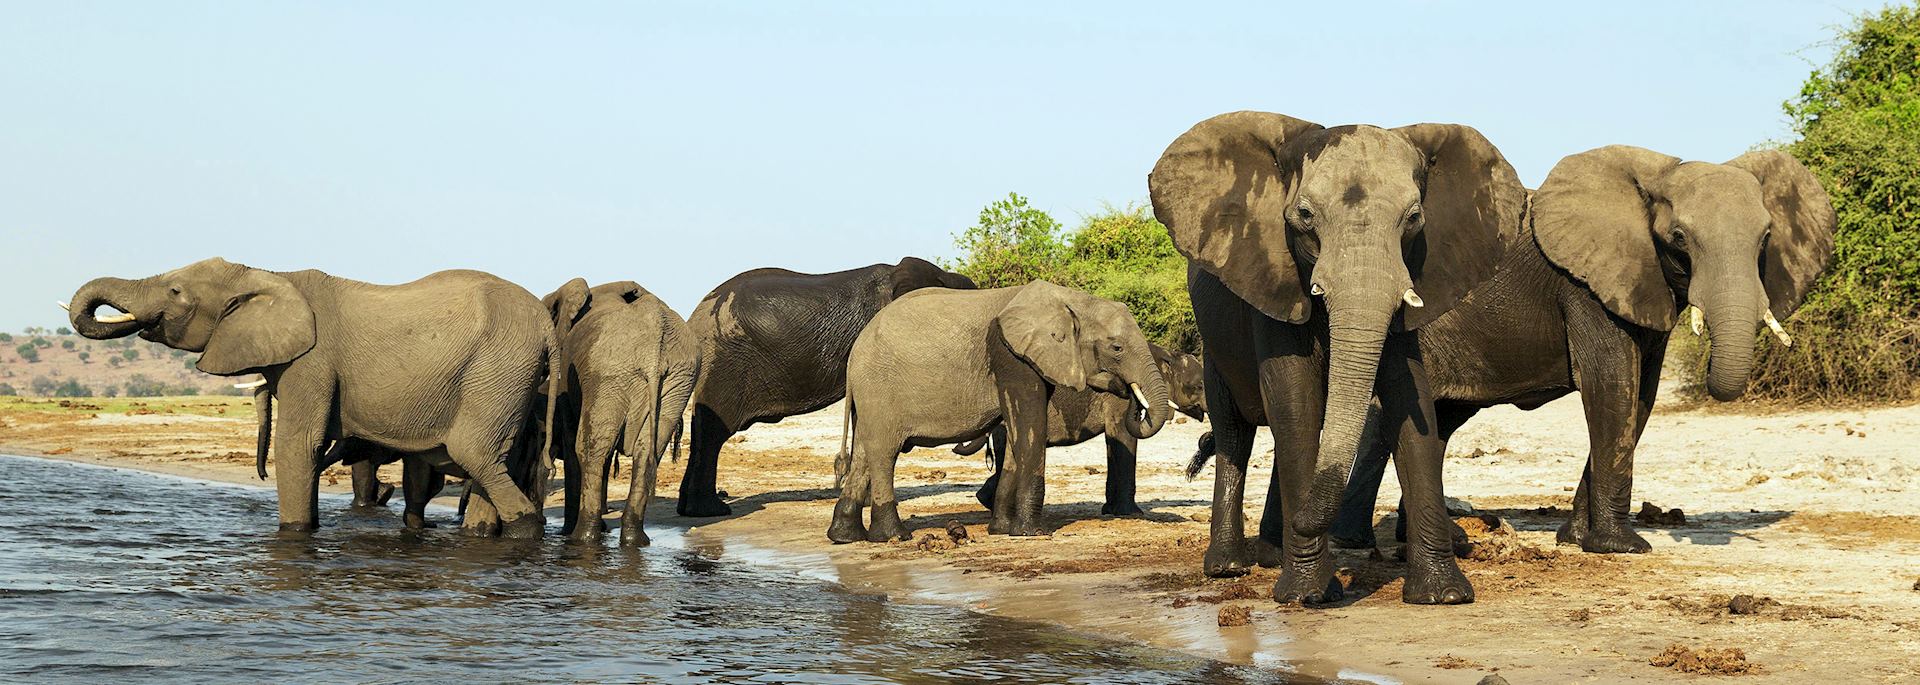 Elephant on the Chobe River